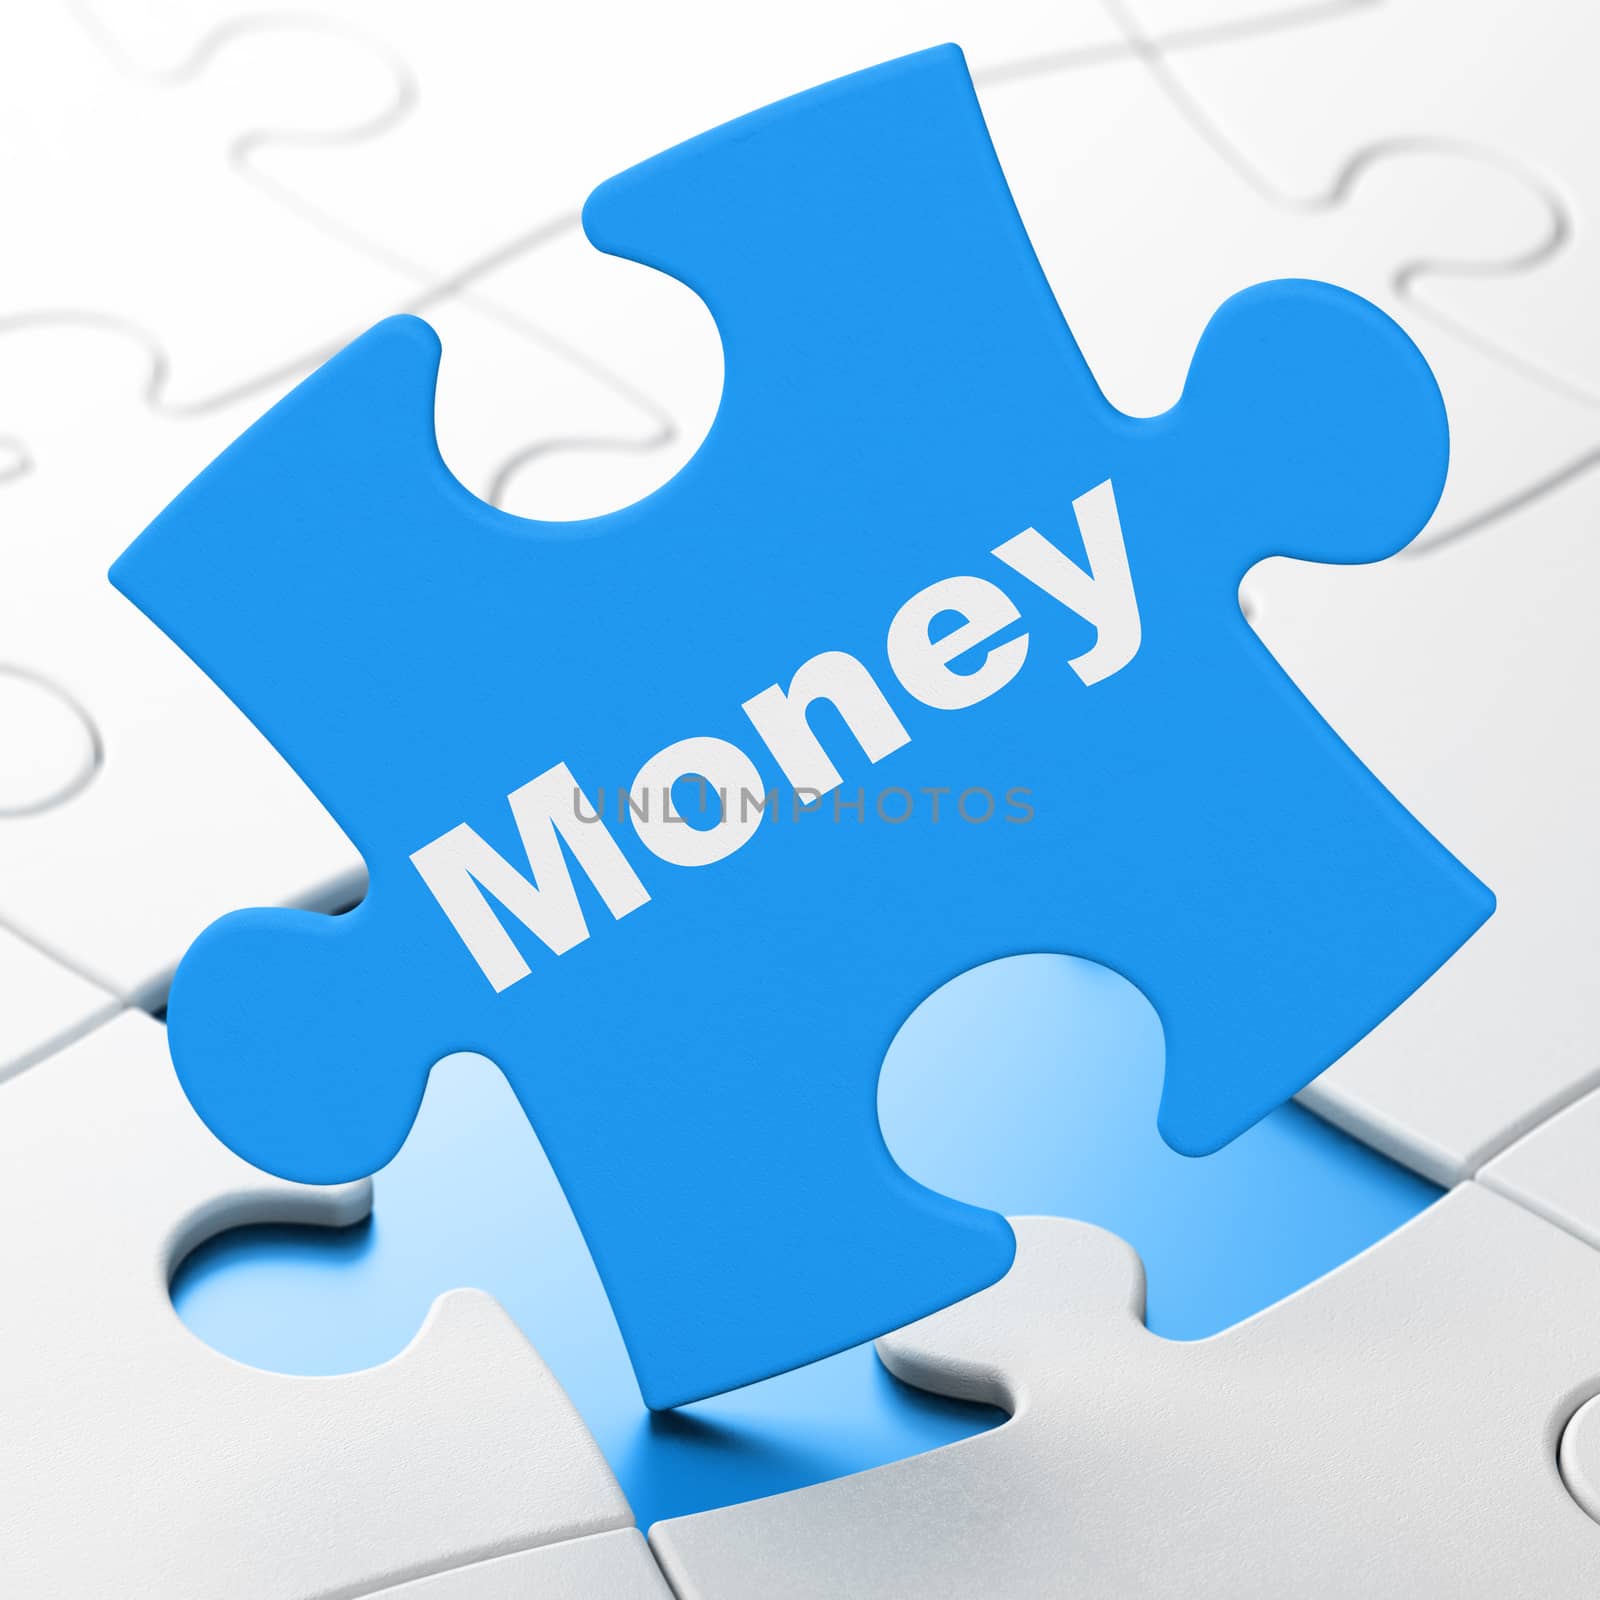 Money concept: Money on puzzle background by maxkabakov